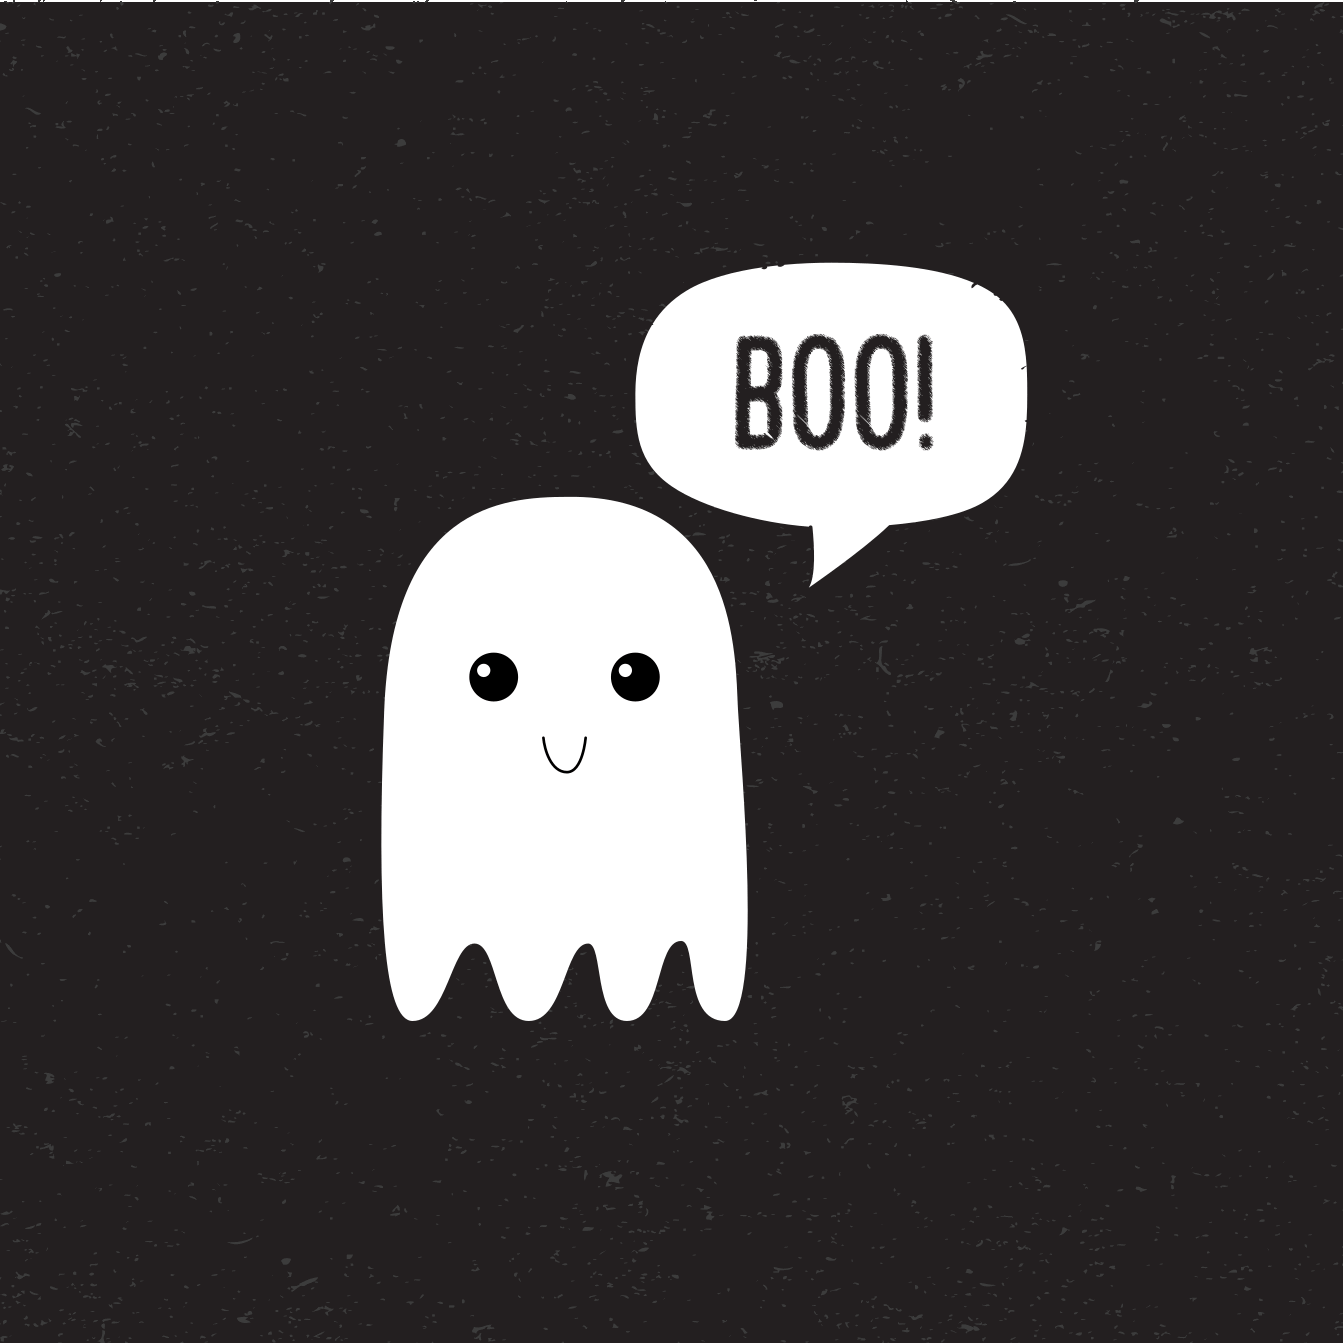 A cute ghost saying Boo!